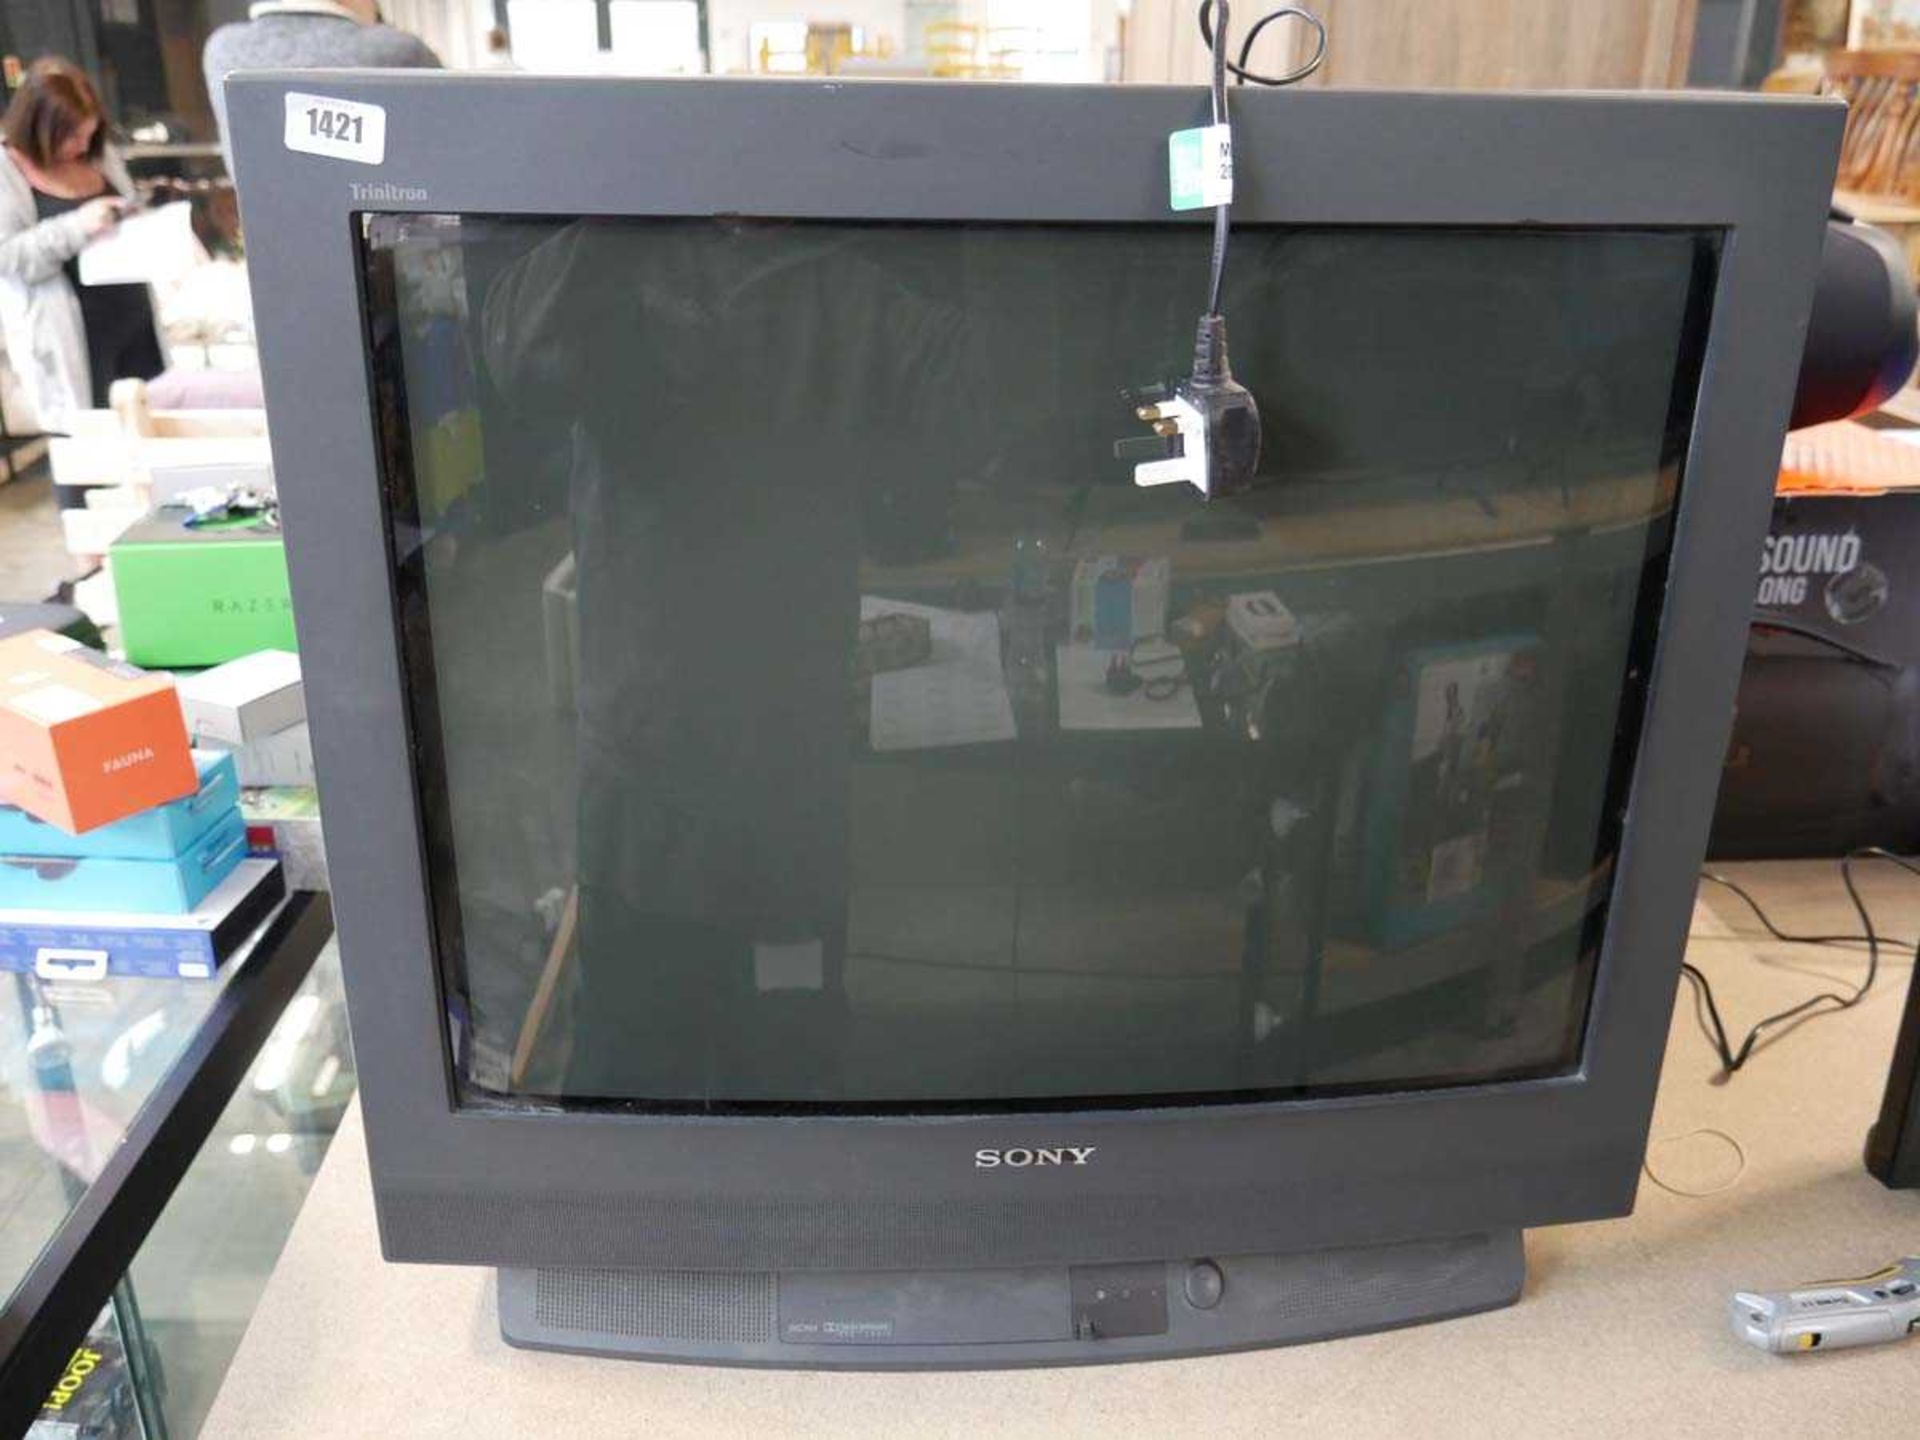 Sony Trinitron 29" CRT TV, no remote